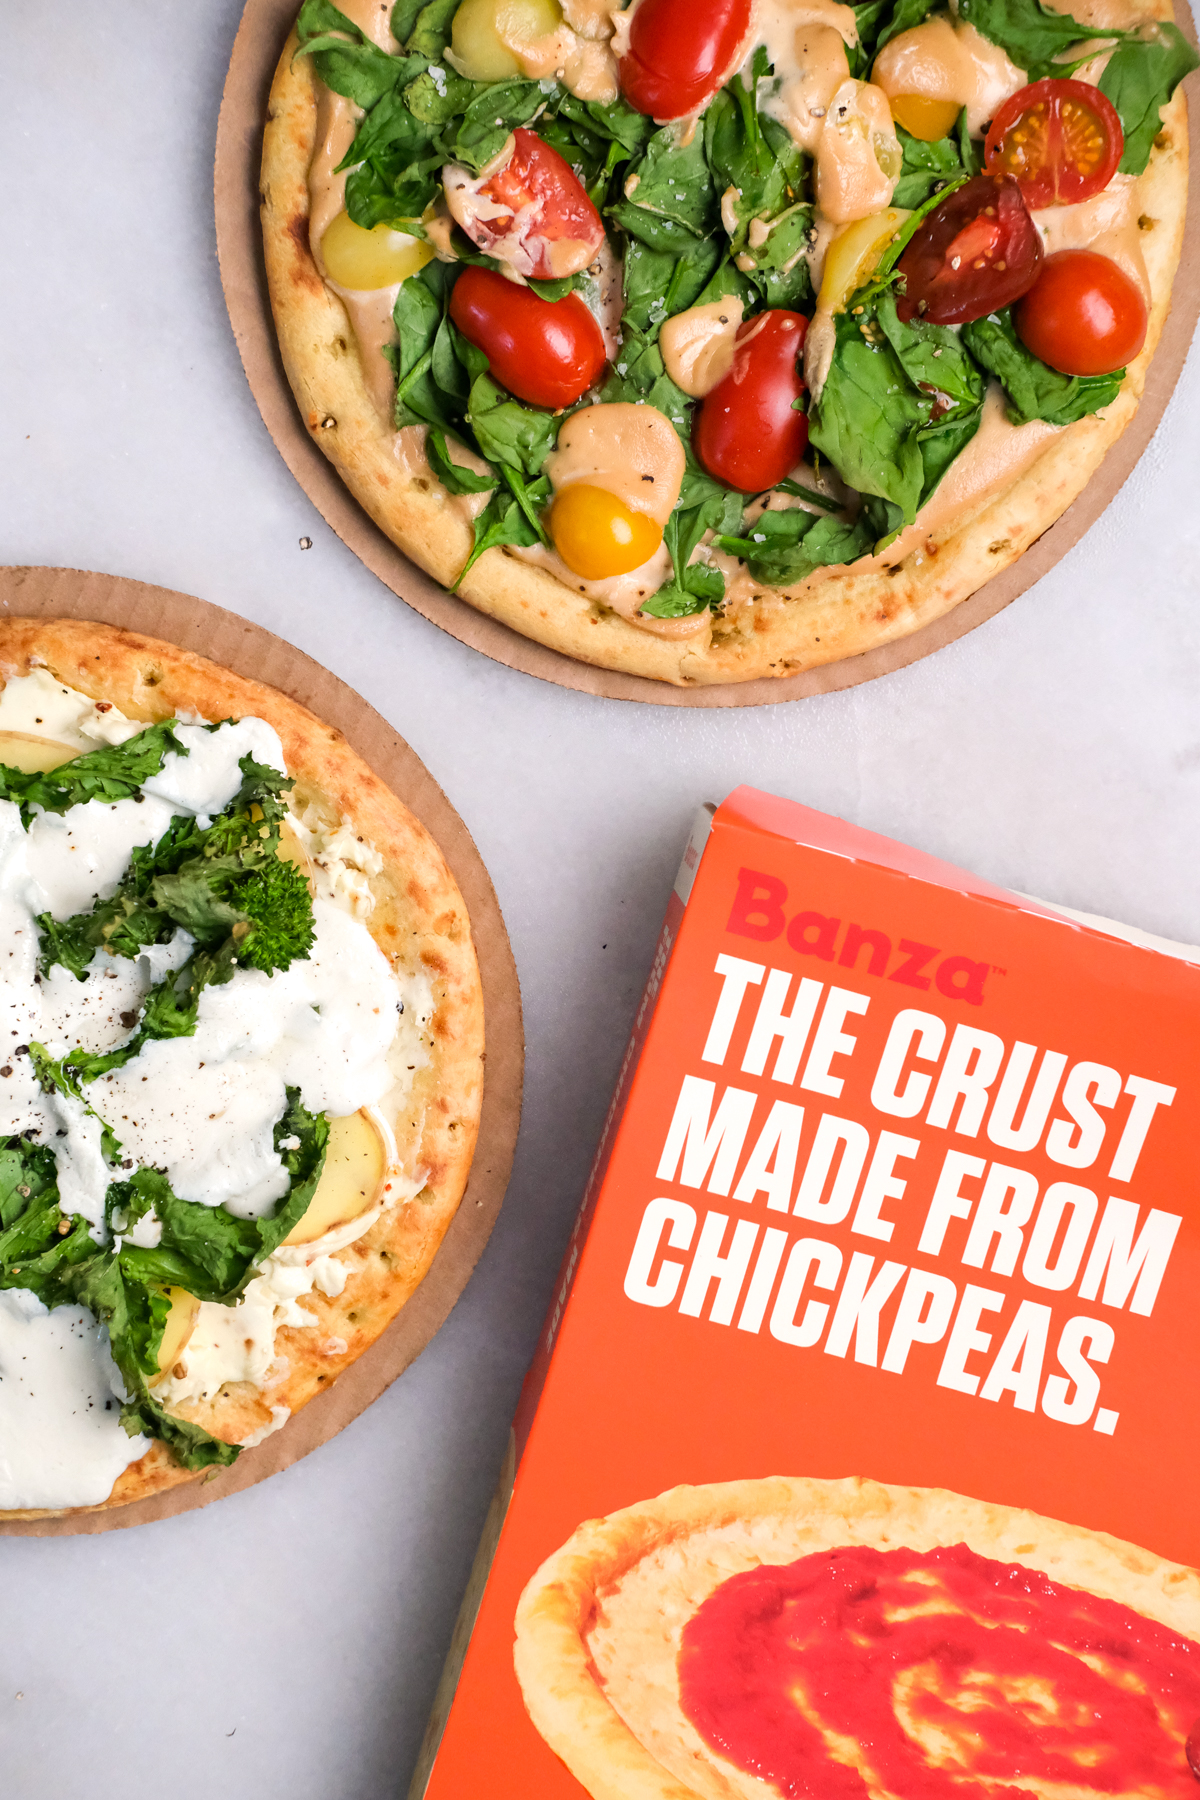 Product Praise: Banza Chickpea Pizza Crust